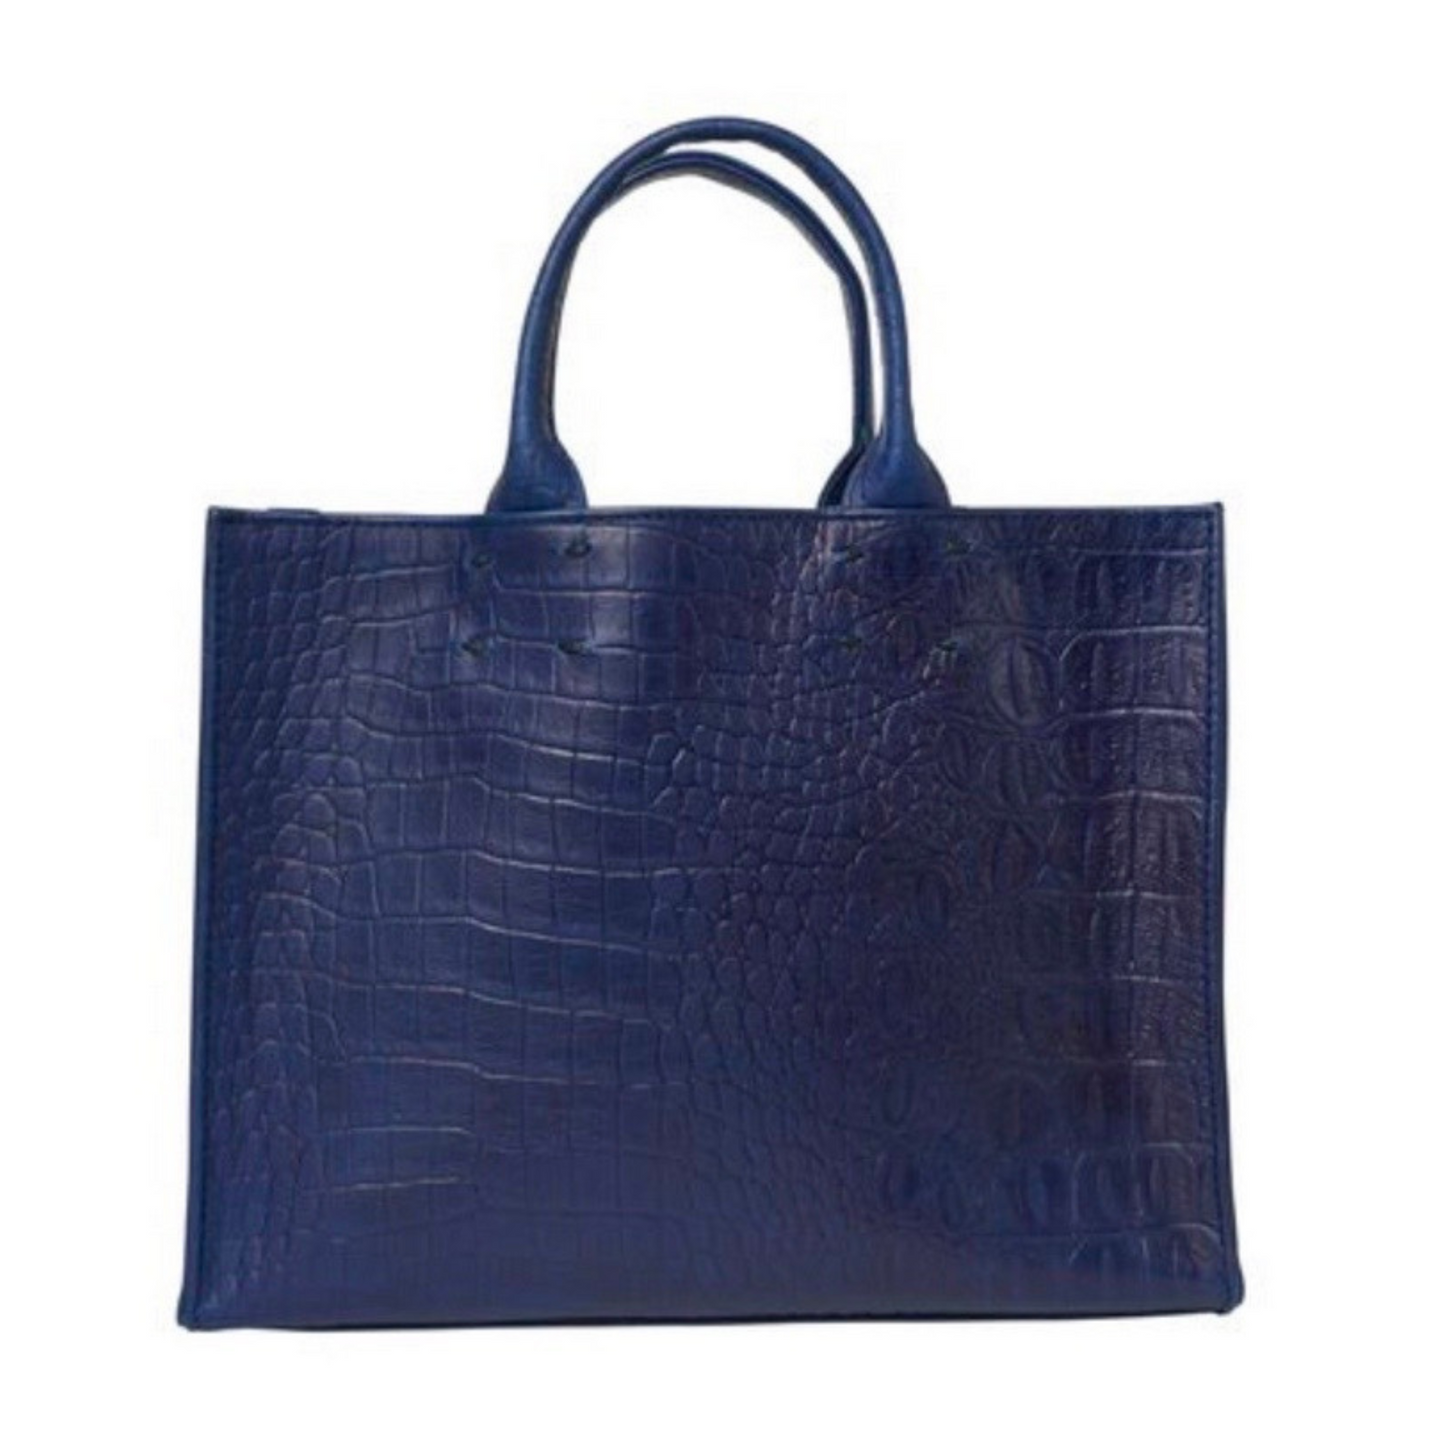 Navy Blue Crocodile Leather Handbag